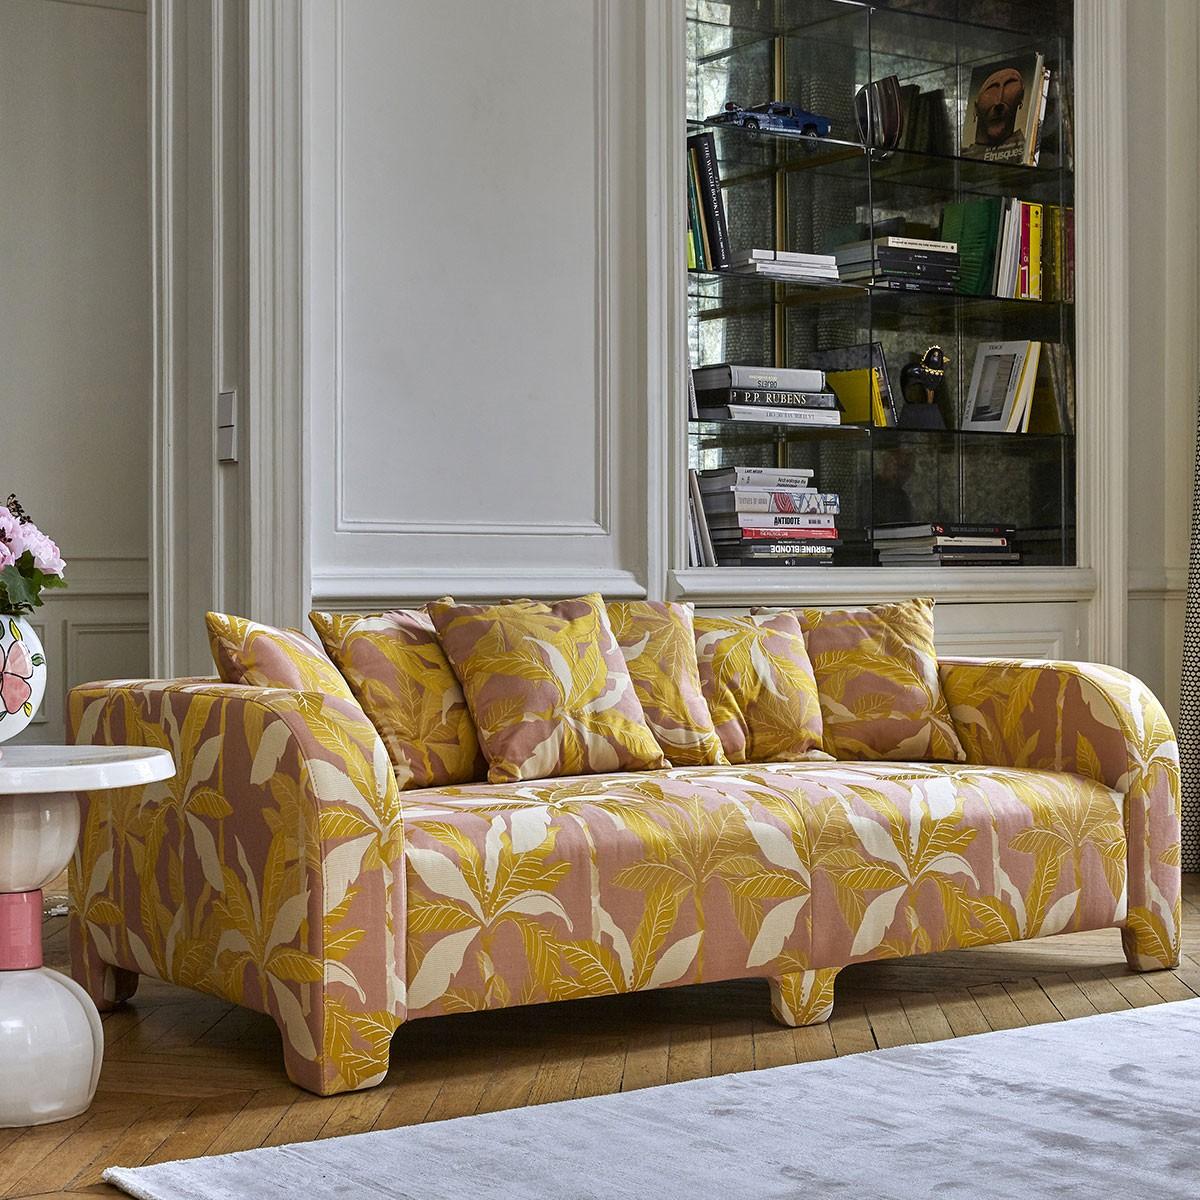 Popus Editions Graziella 3 Seater Sofa in Macadamia London Linen Fabric In New Condition For Sale In Paris, FR